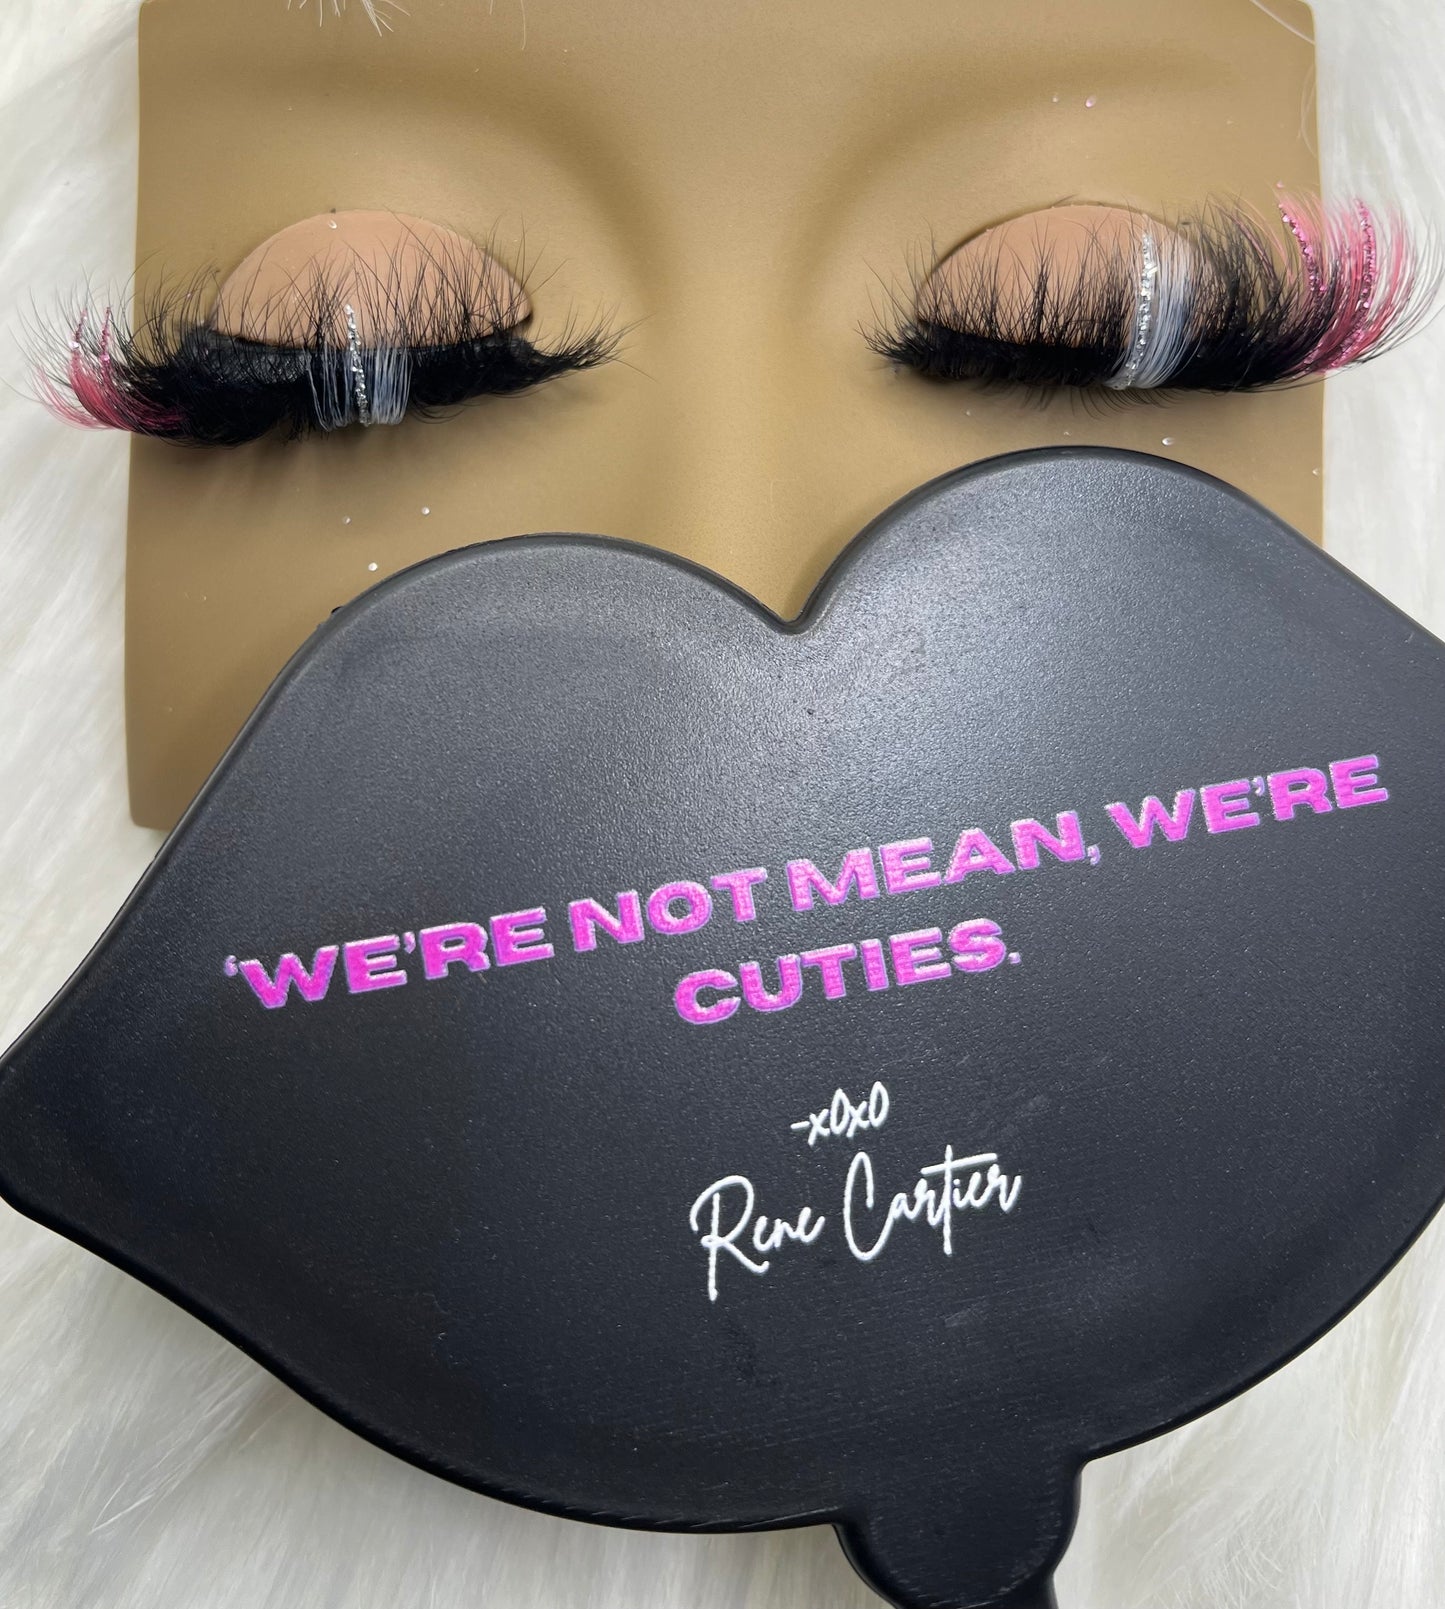 ‘We’re not mean, we’re cuties’ L I P Lash Mirror